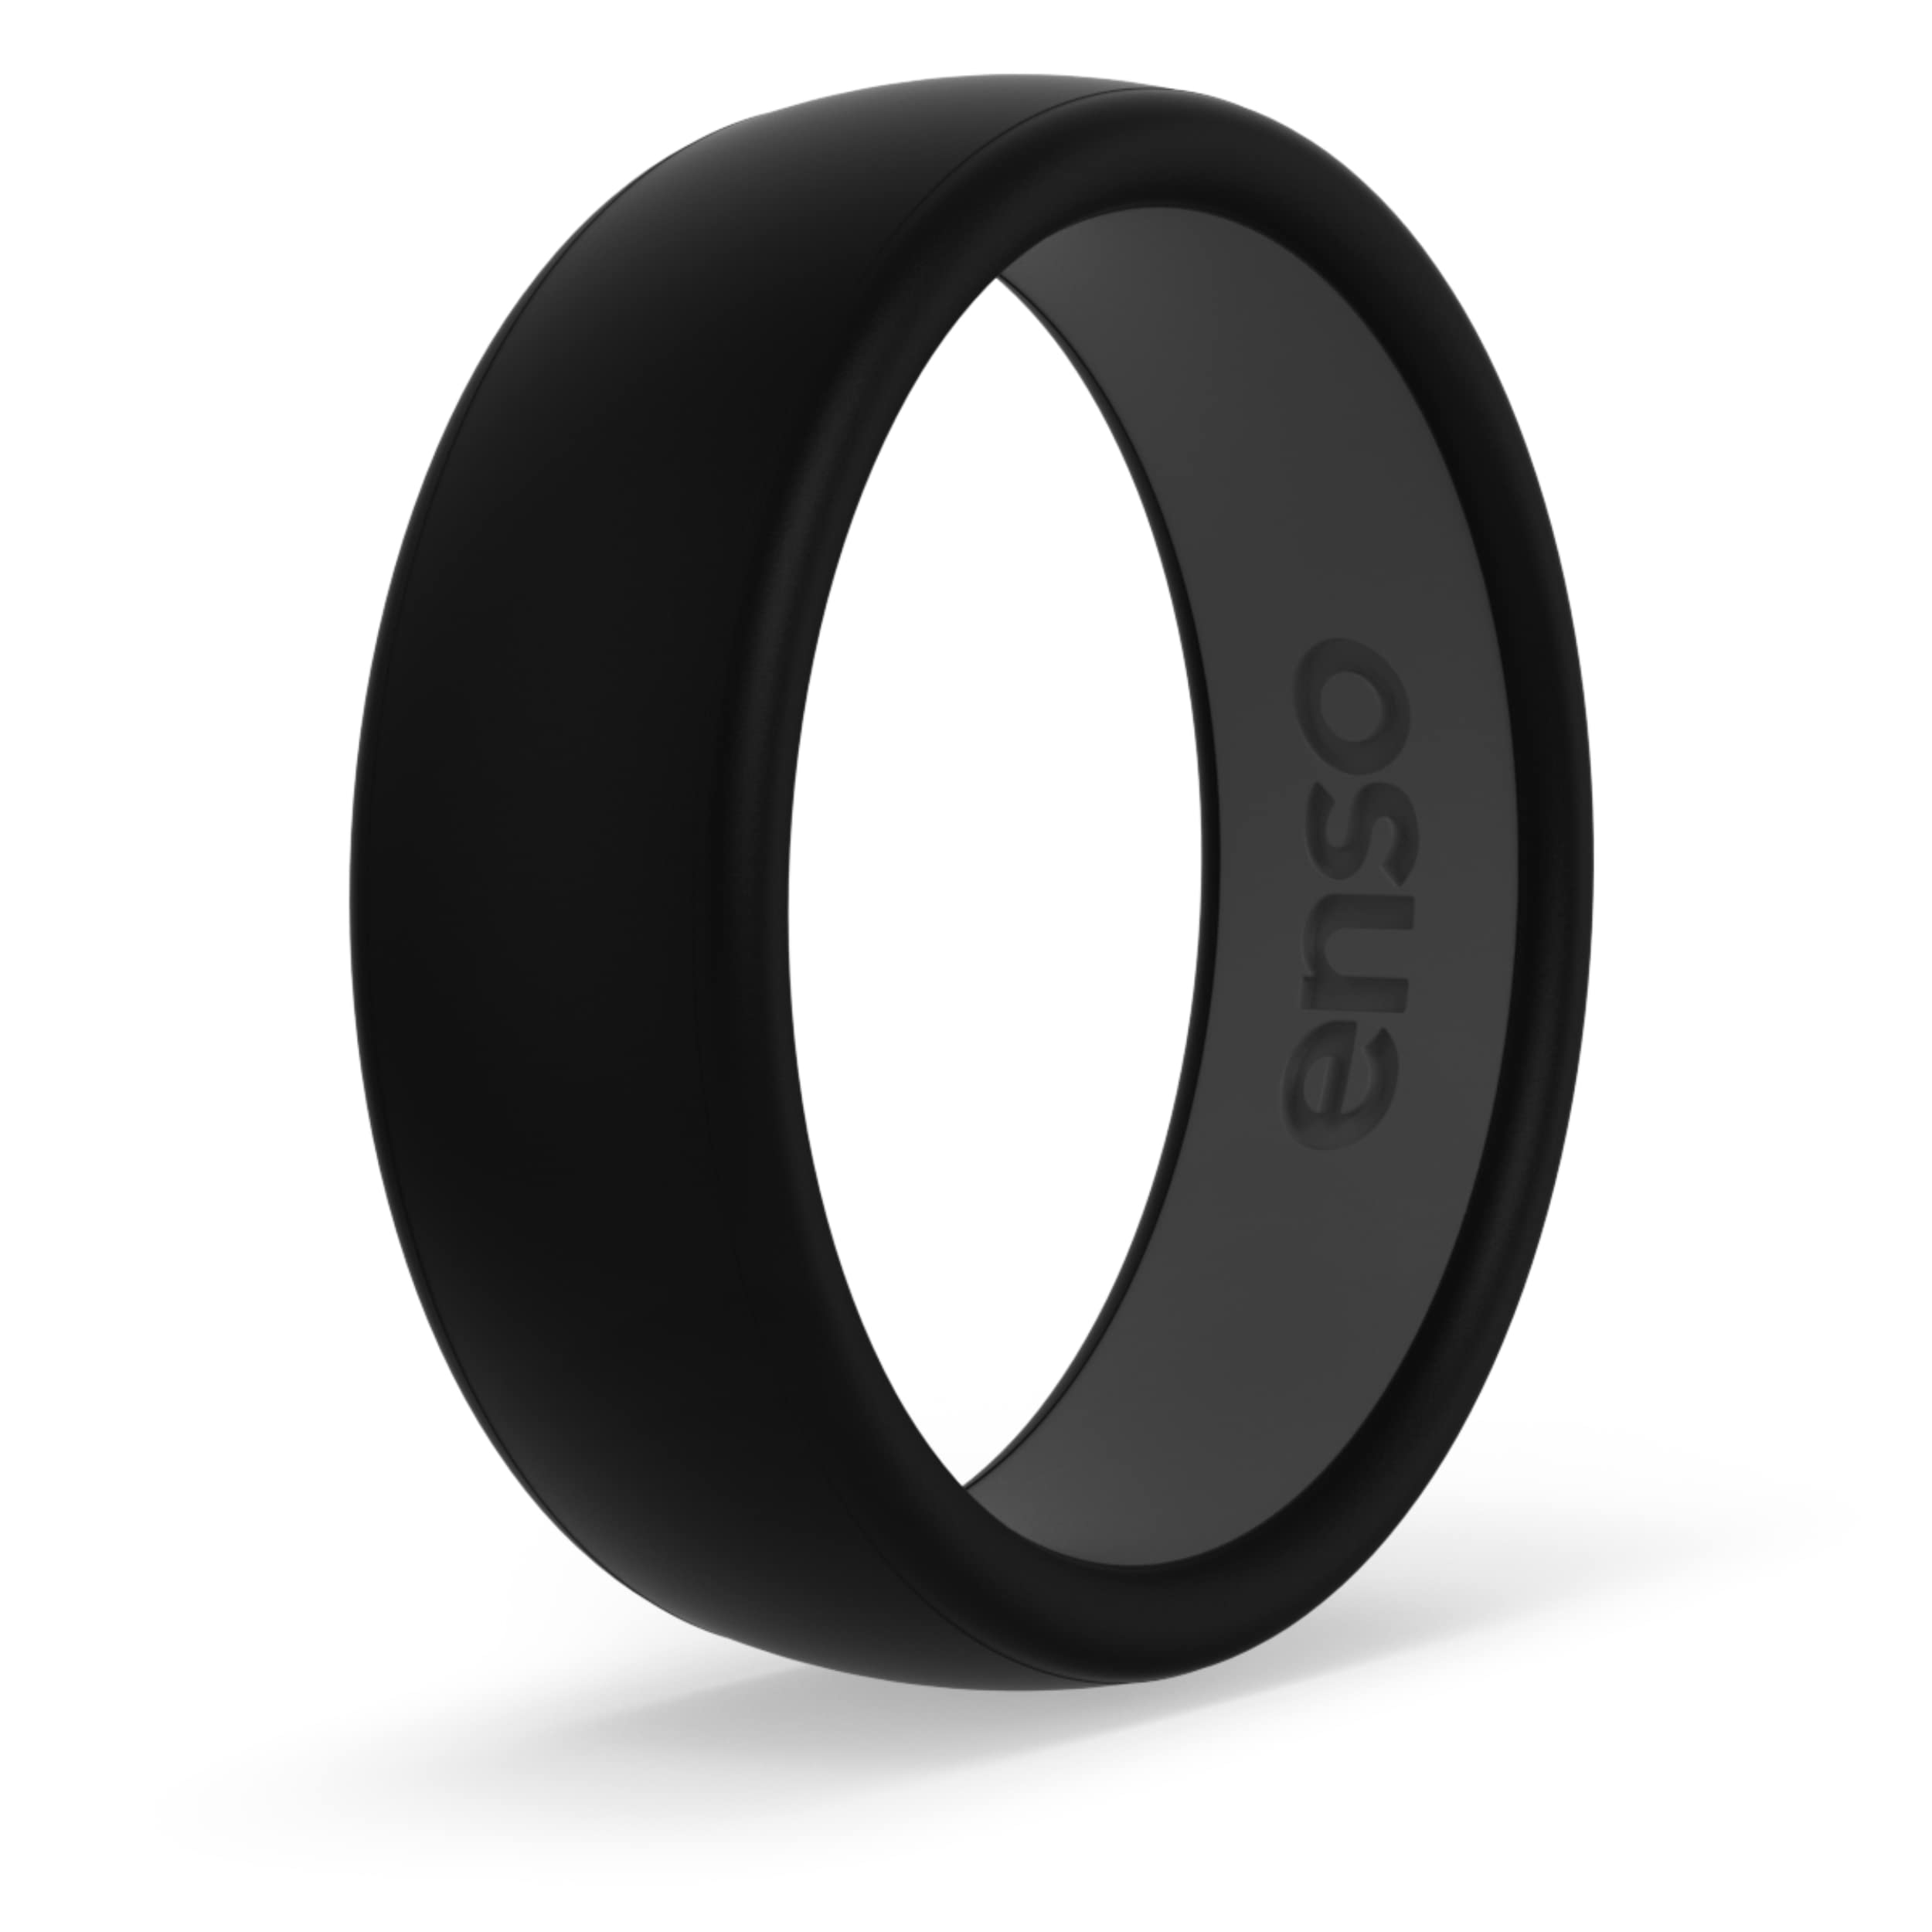 Enso Rings Dualtone Series Silicone Ring - White/Obsidian - 14